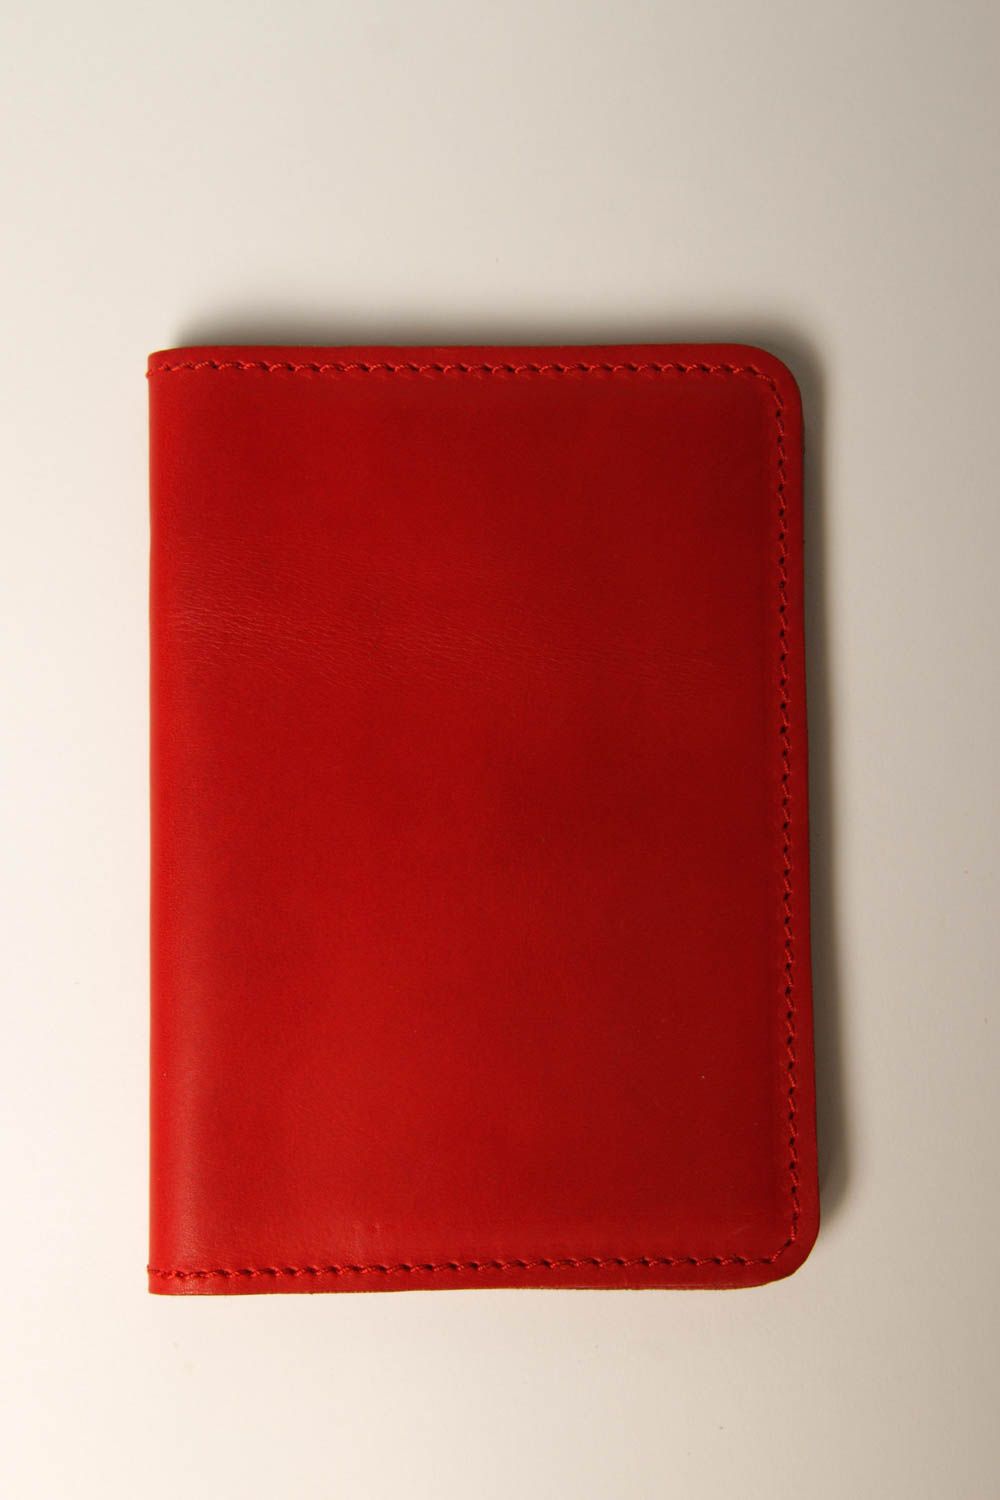 Handmade red leather wallet unusual elegant purse stylish female accessory photo 2